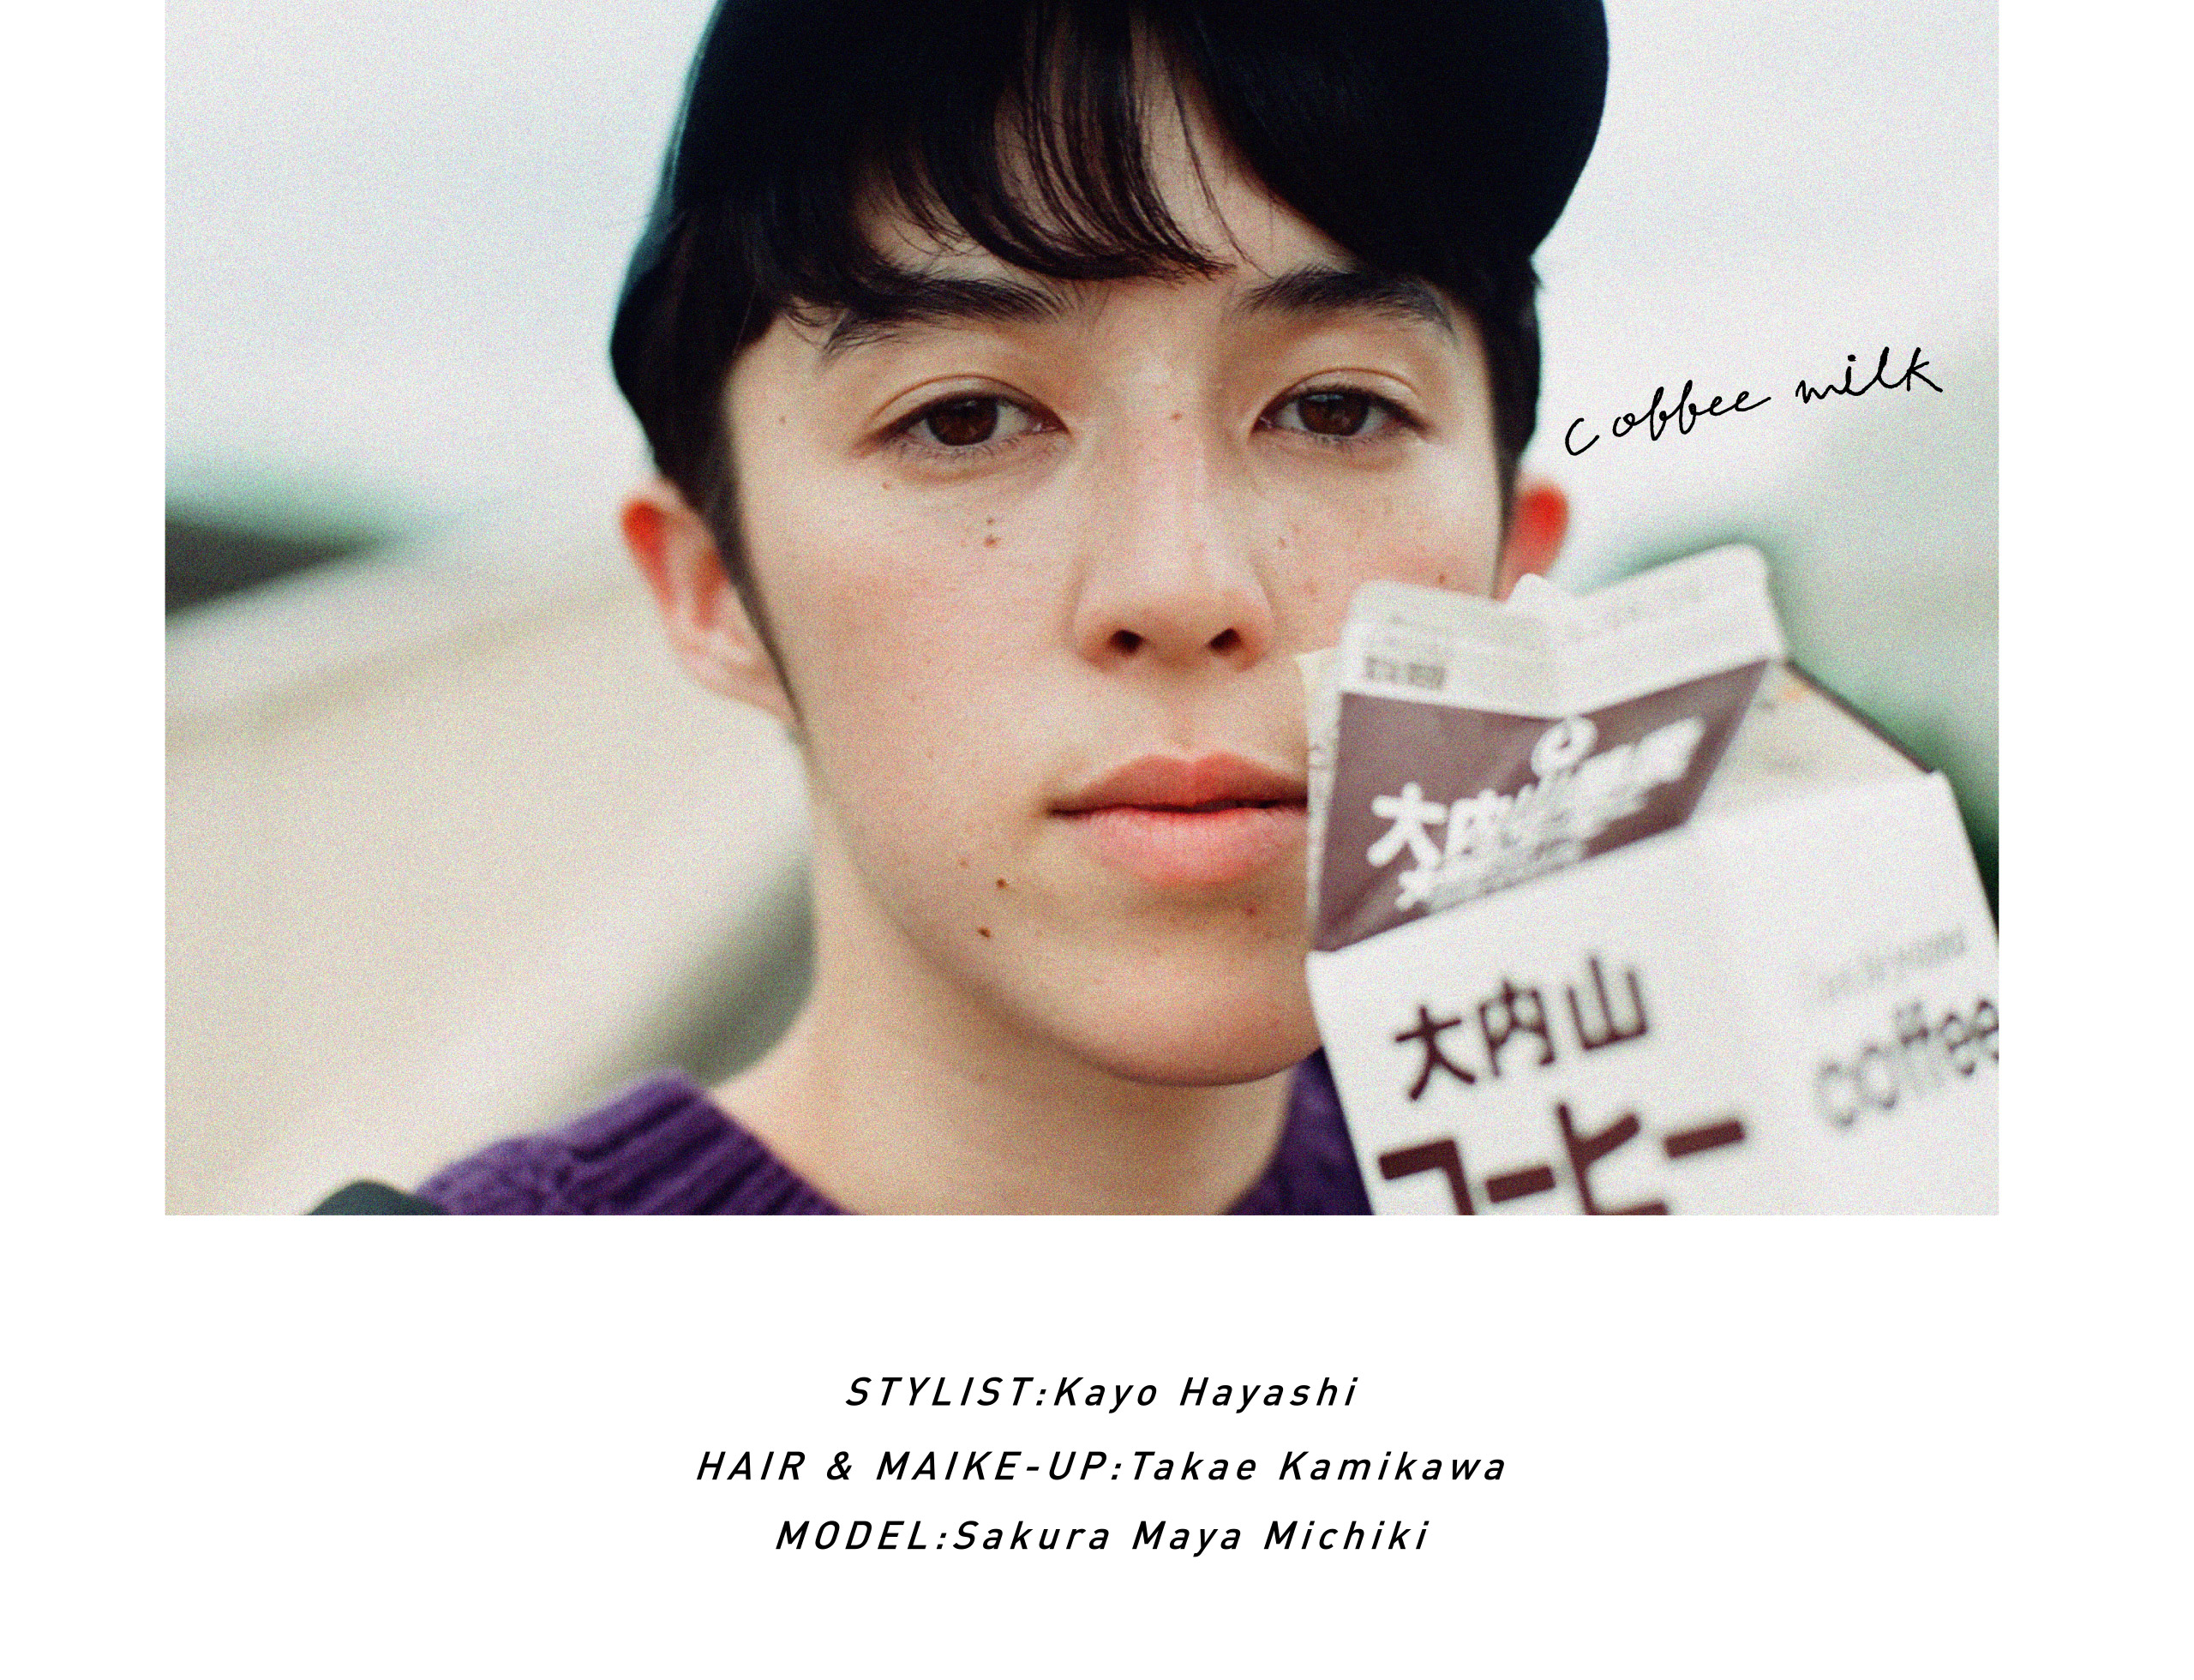 STYLIST:Kayo Hayashi / HAIR & MAKE-UP:Takae Kamikawa / MODEL:Sakura Maya Michiki